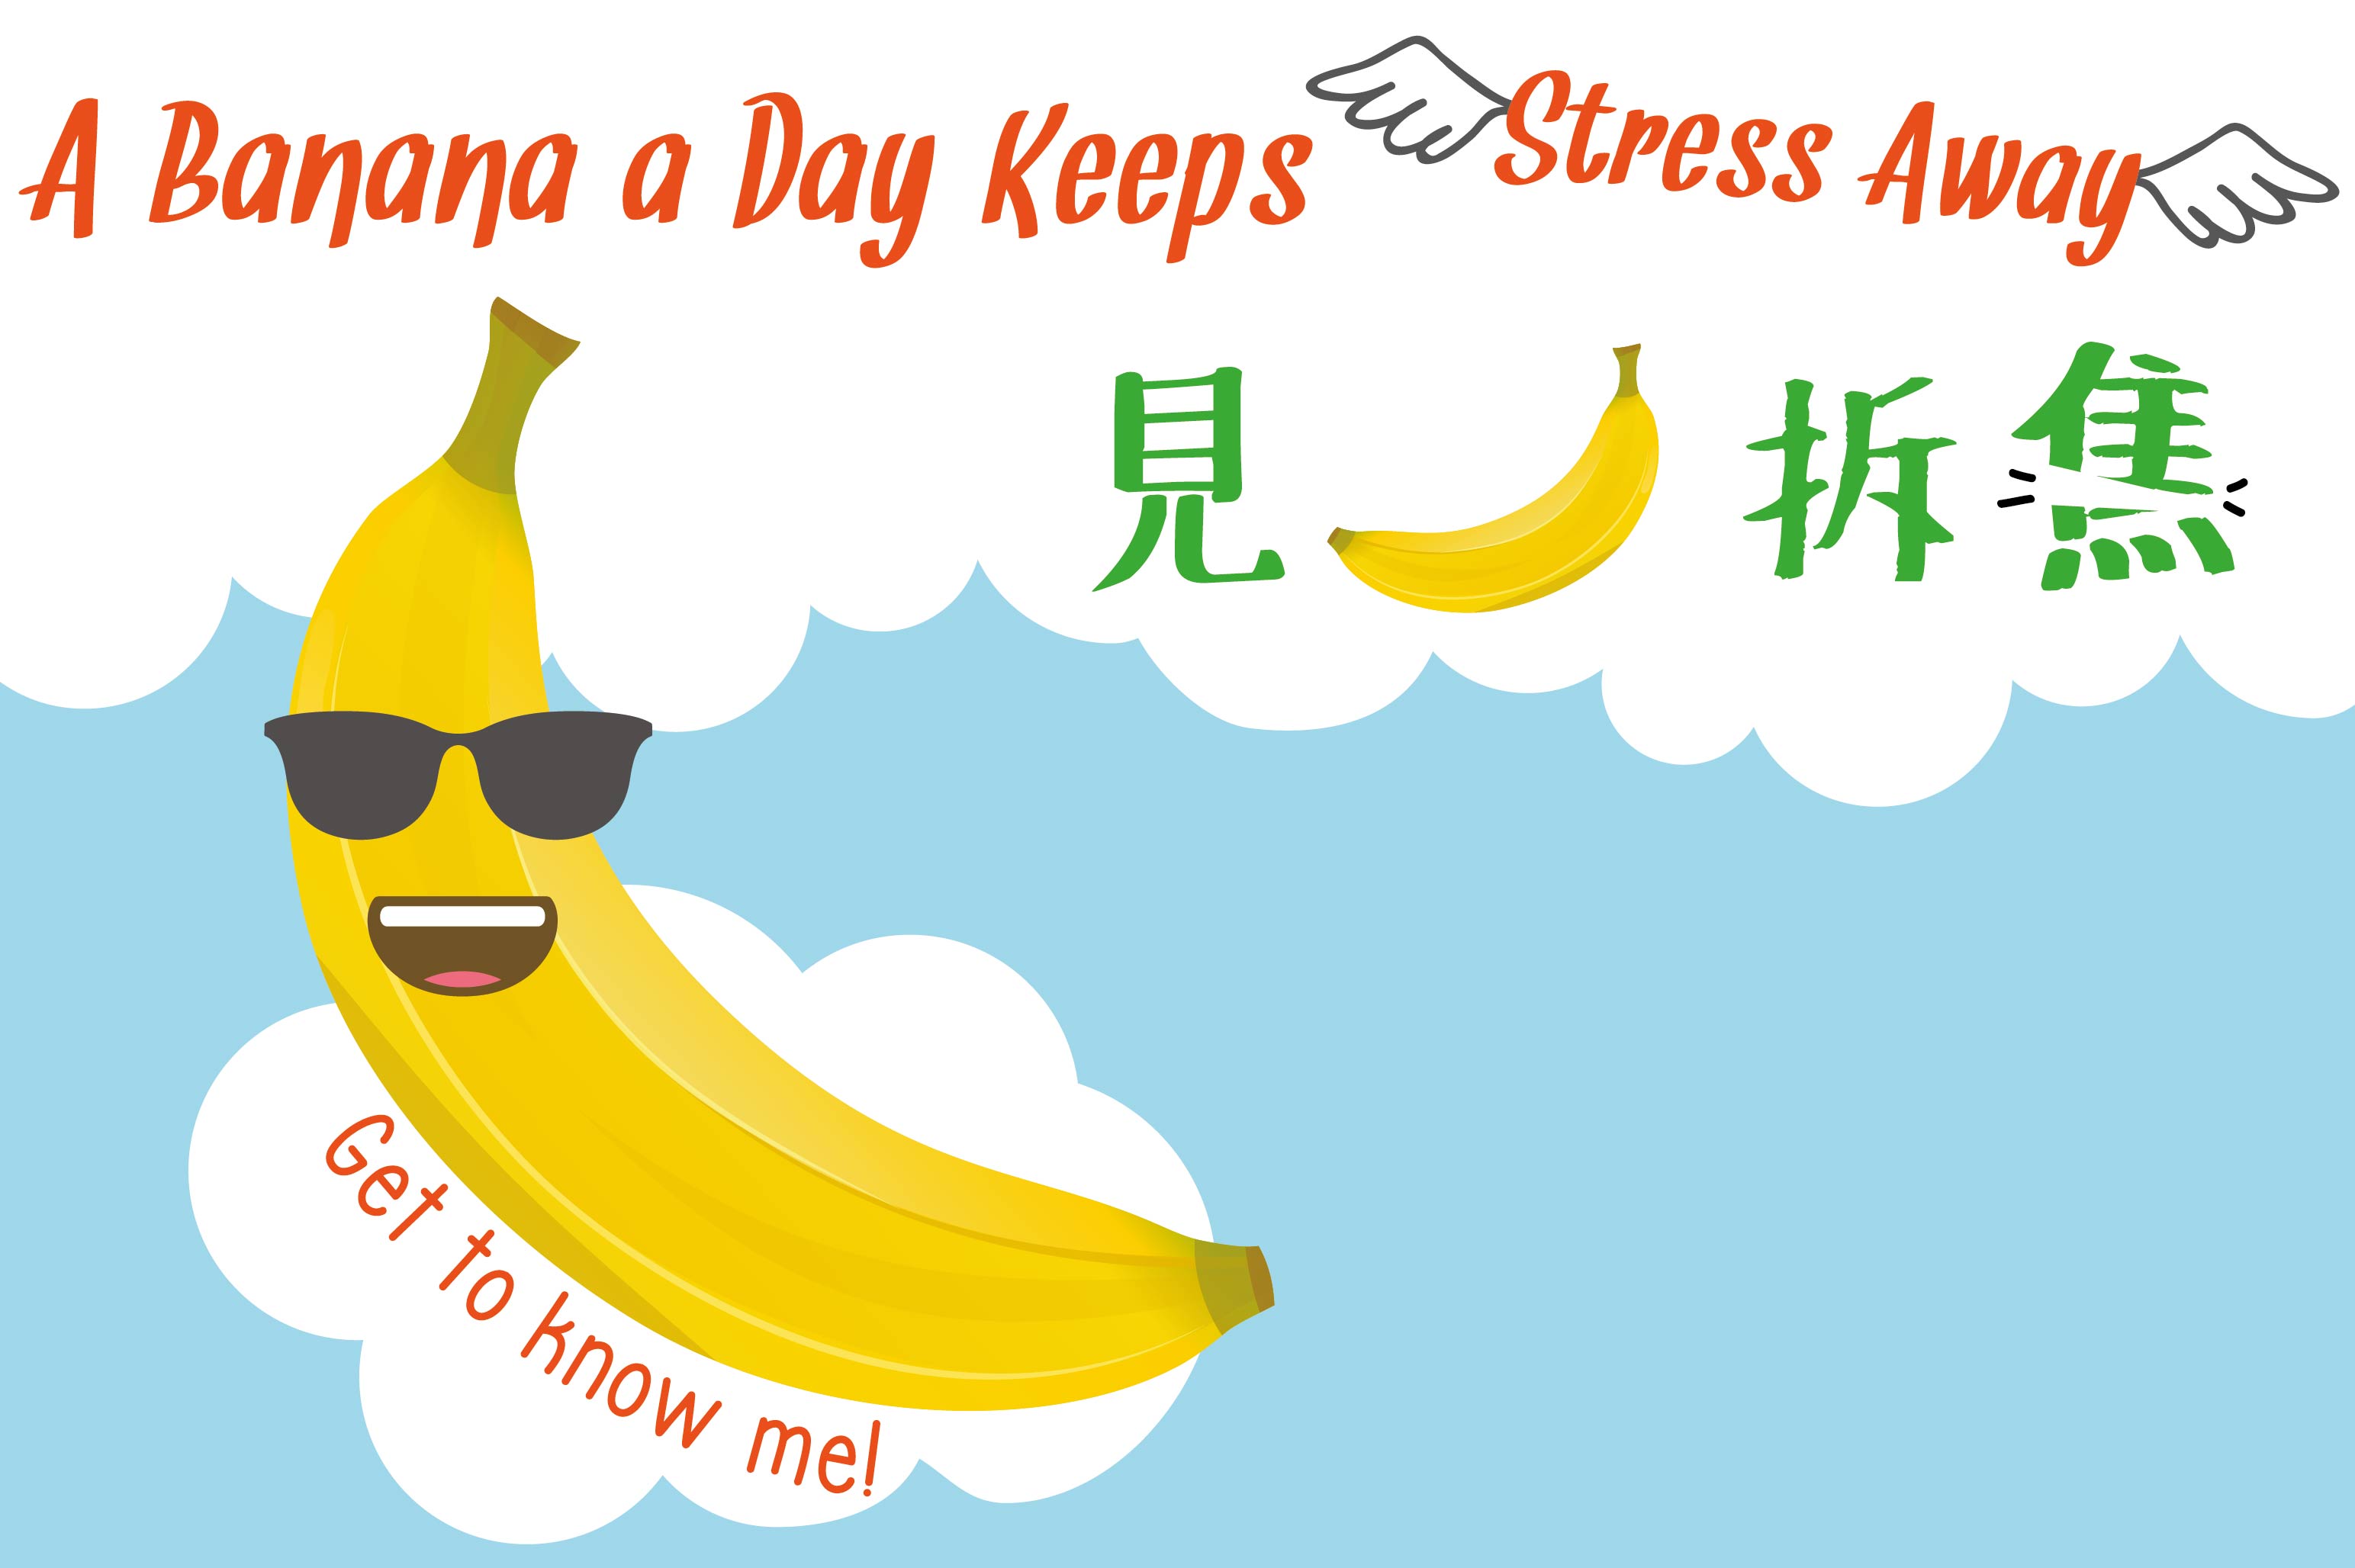 Benefits of Banana